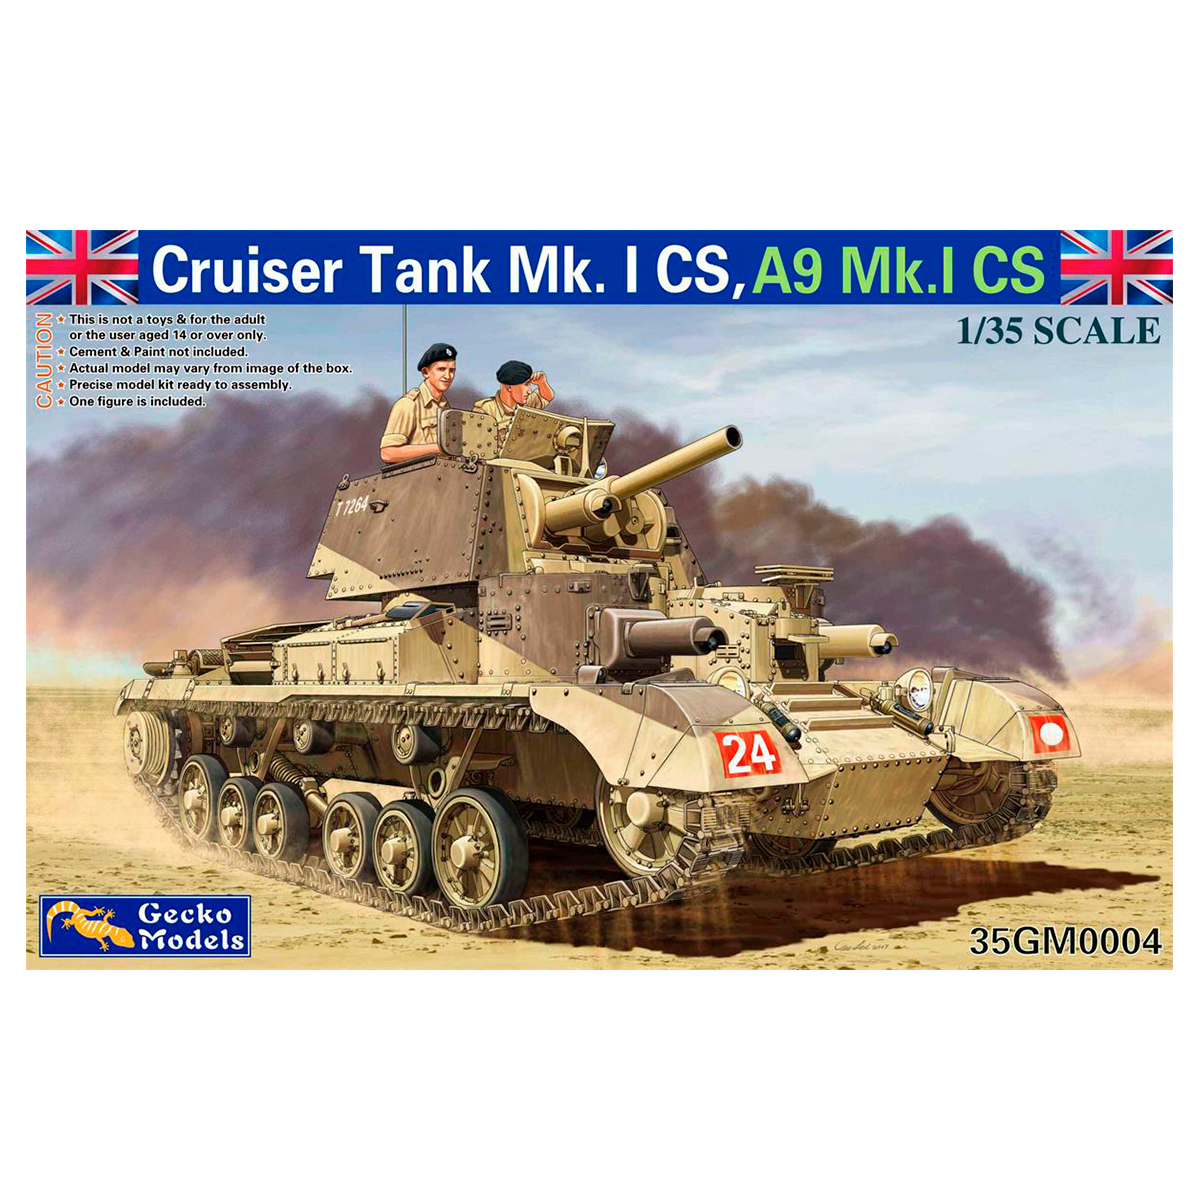 1/35  Cruiser Tank Mk. I CS, A9Mk.I CS